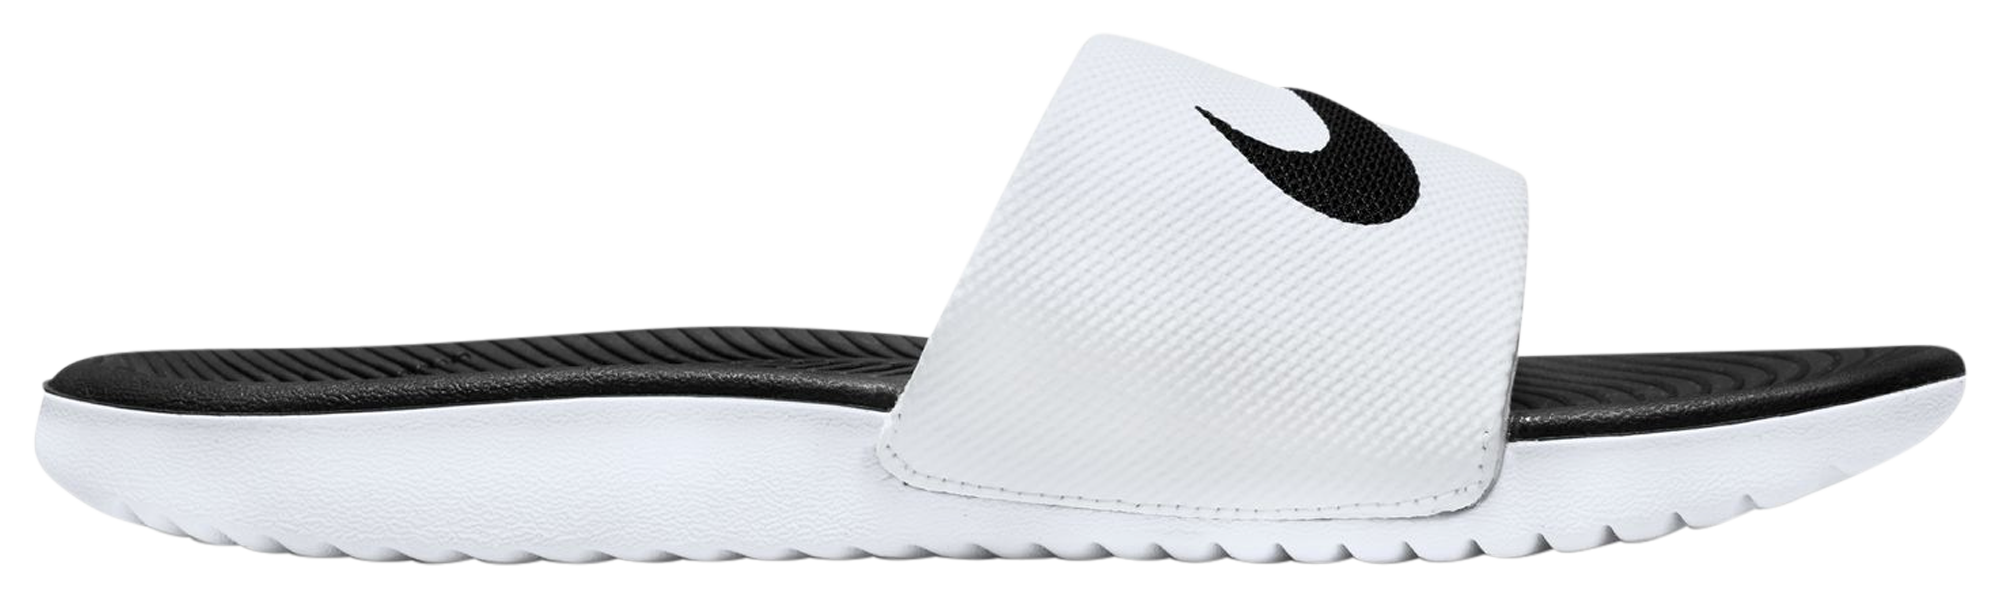 Nike Kawa Slides | Foot Locker